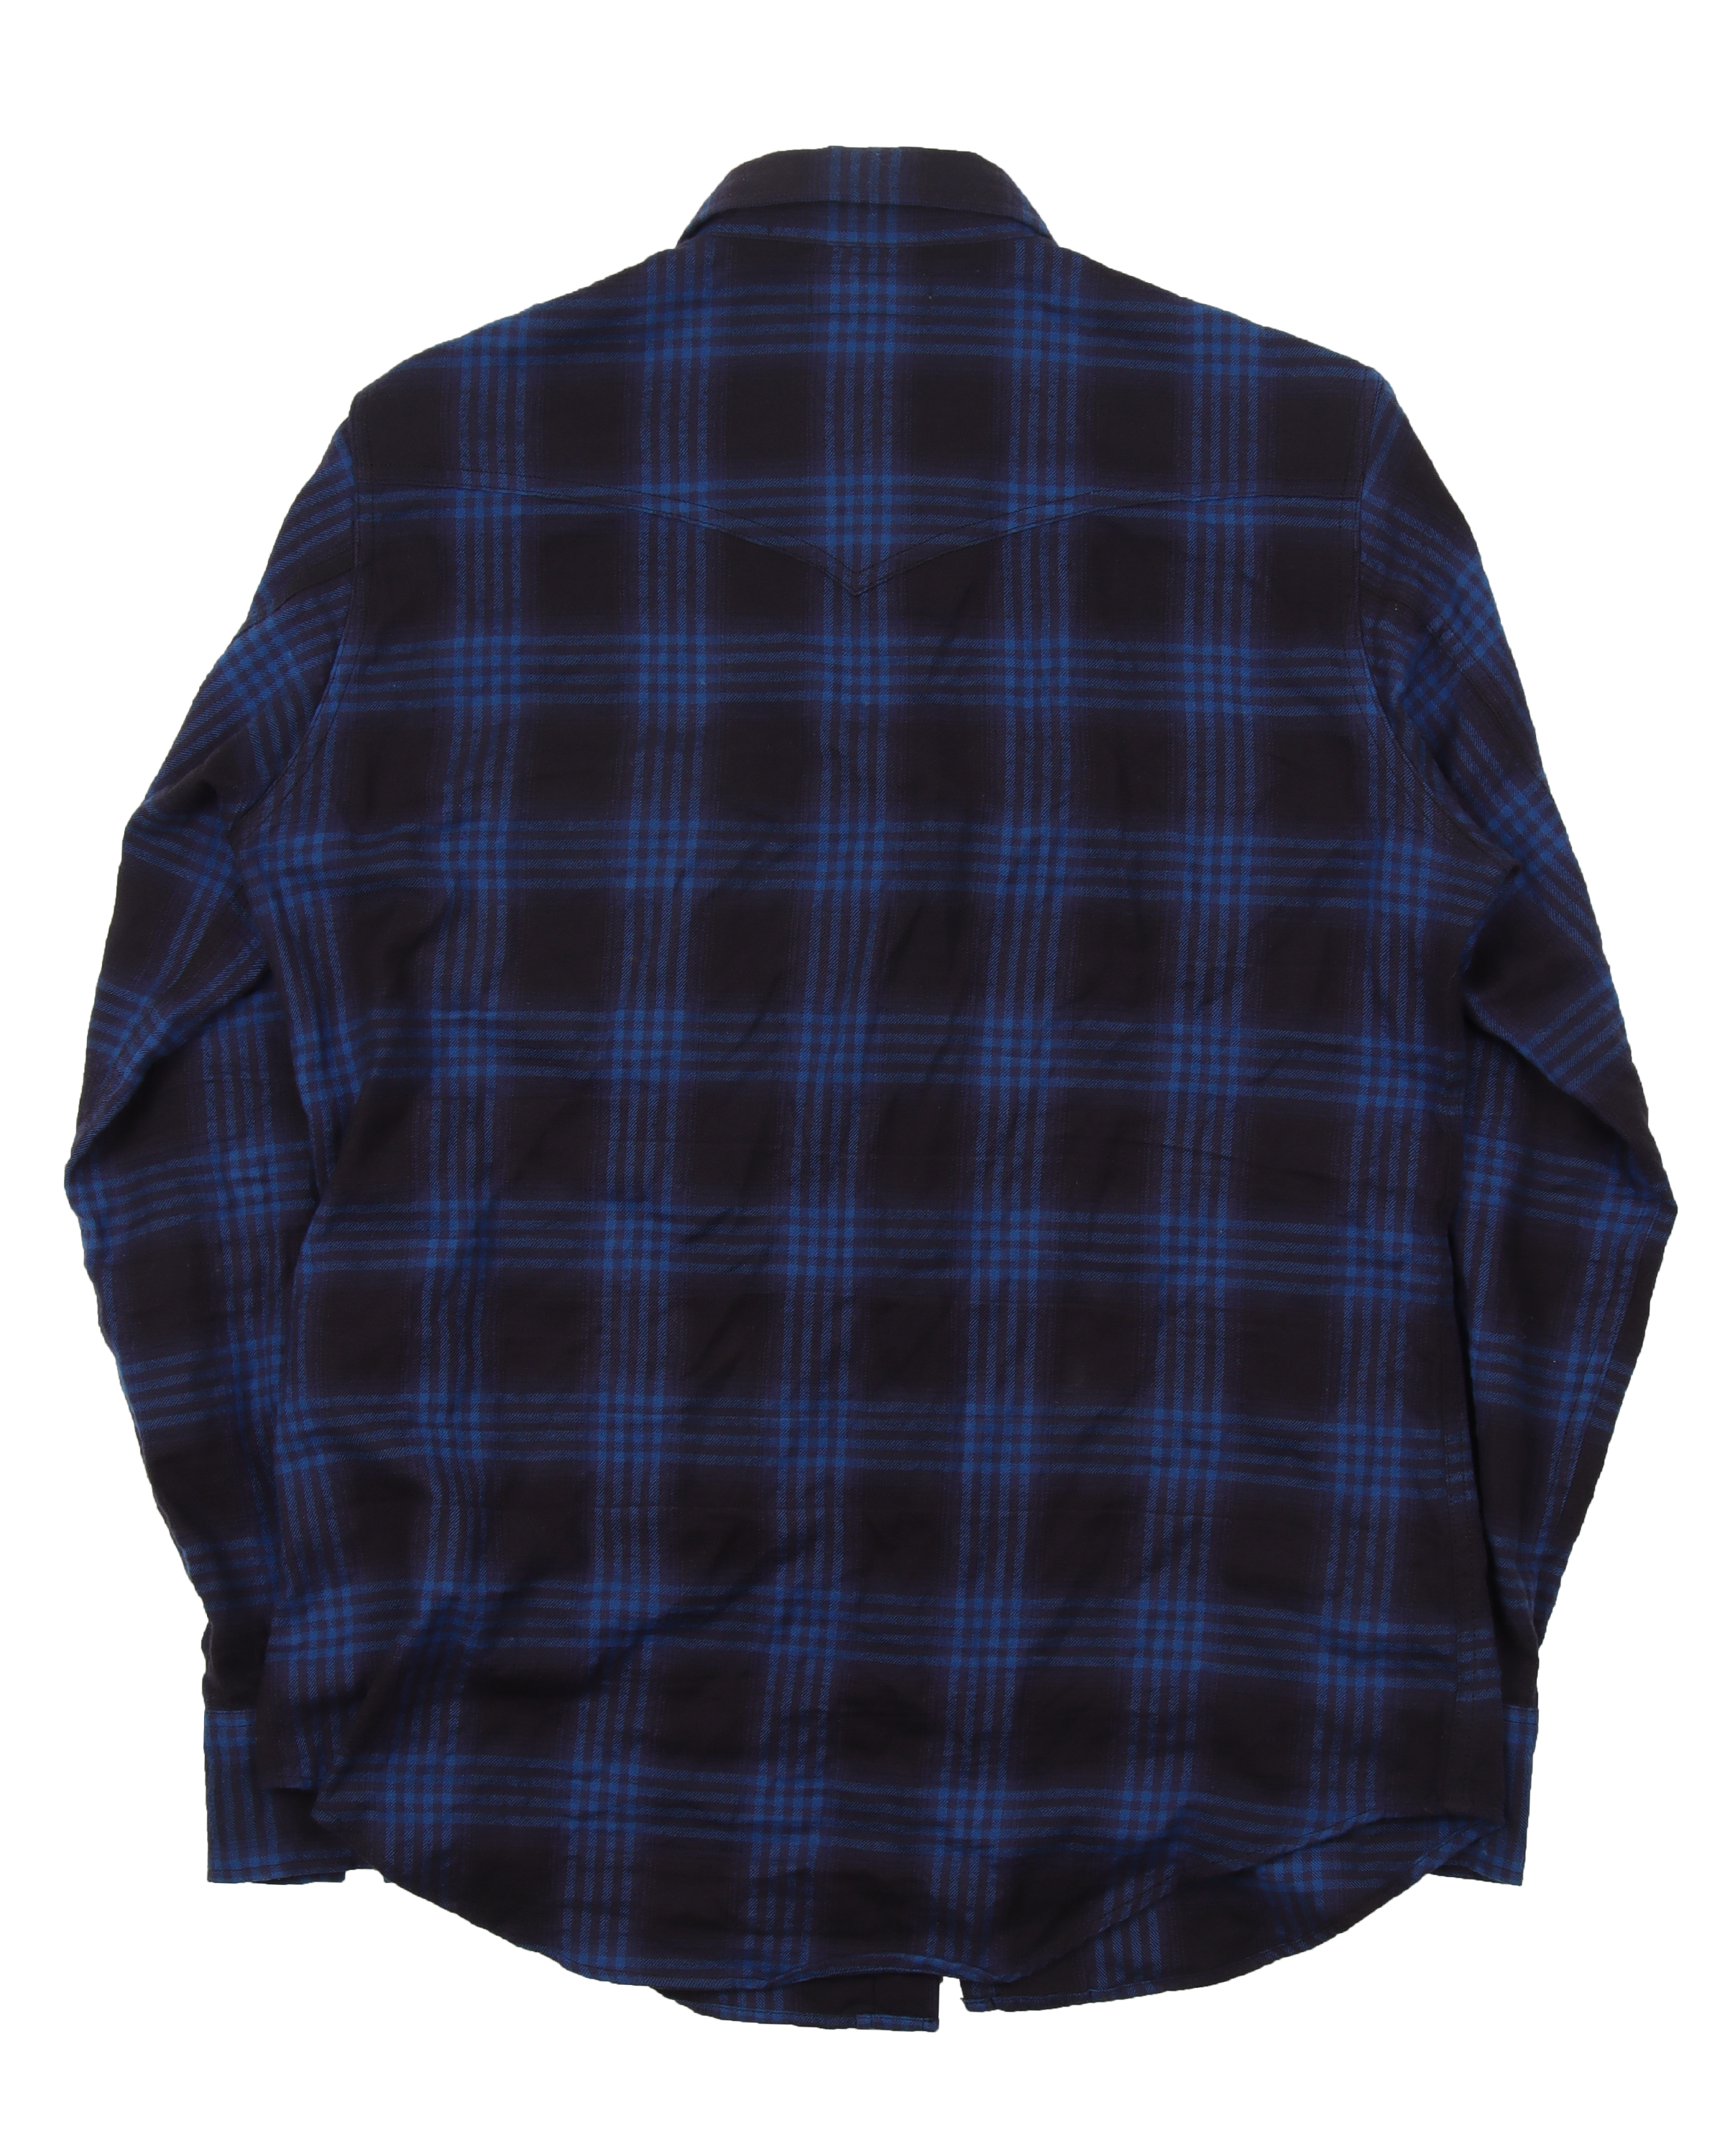 Flannel Shirt (2016)